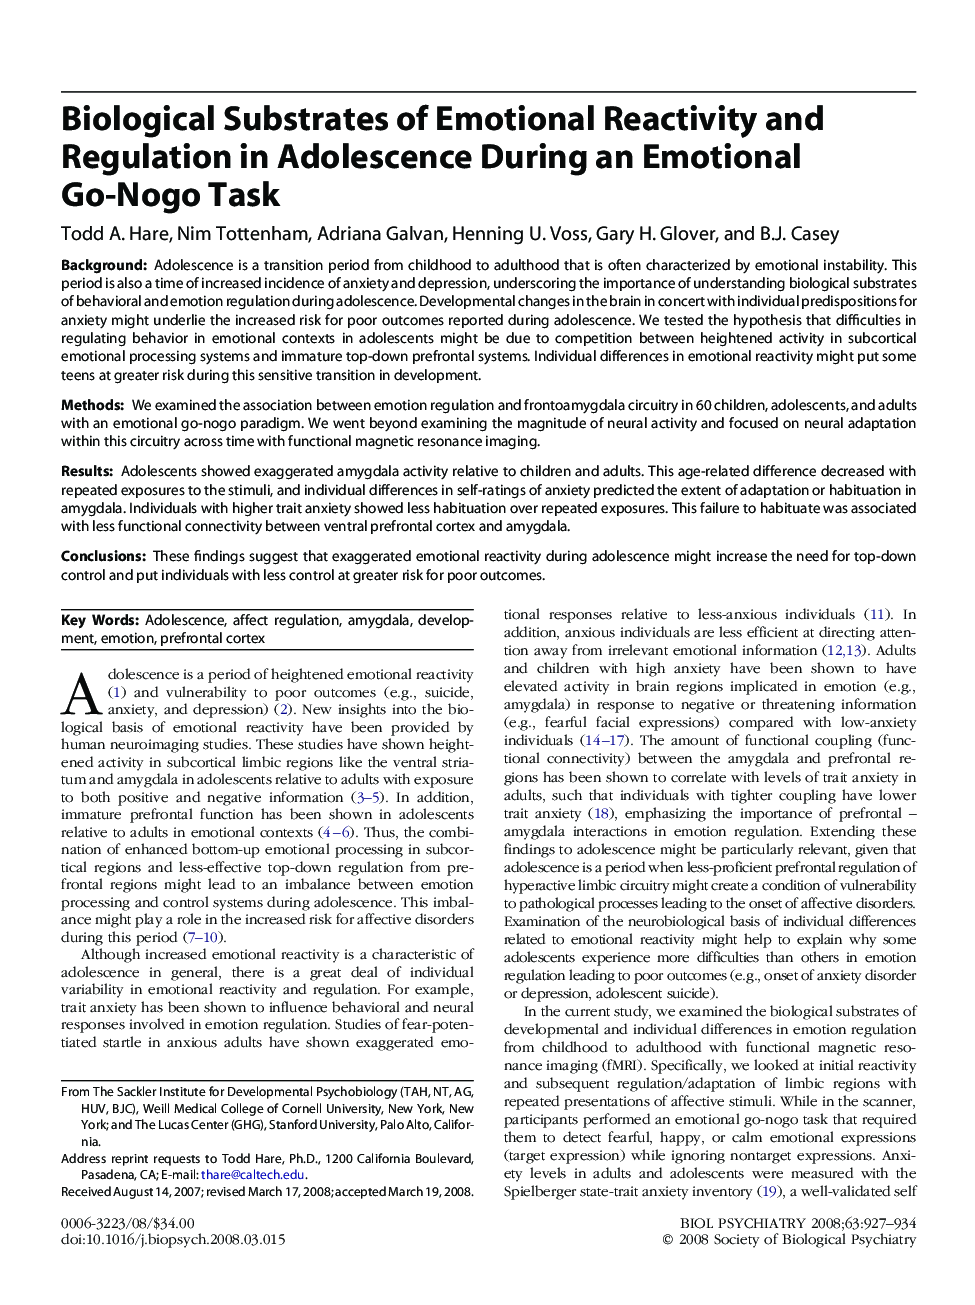 Biological Substrates of Emotional Reactivity and Regulation in Adolescence During an Emotional Go-Nogo Task